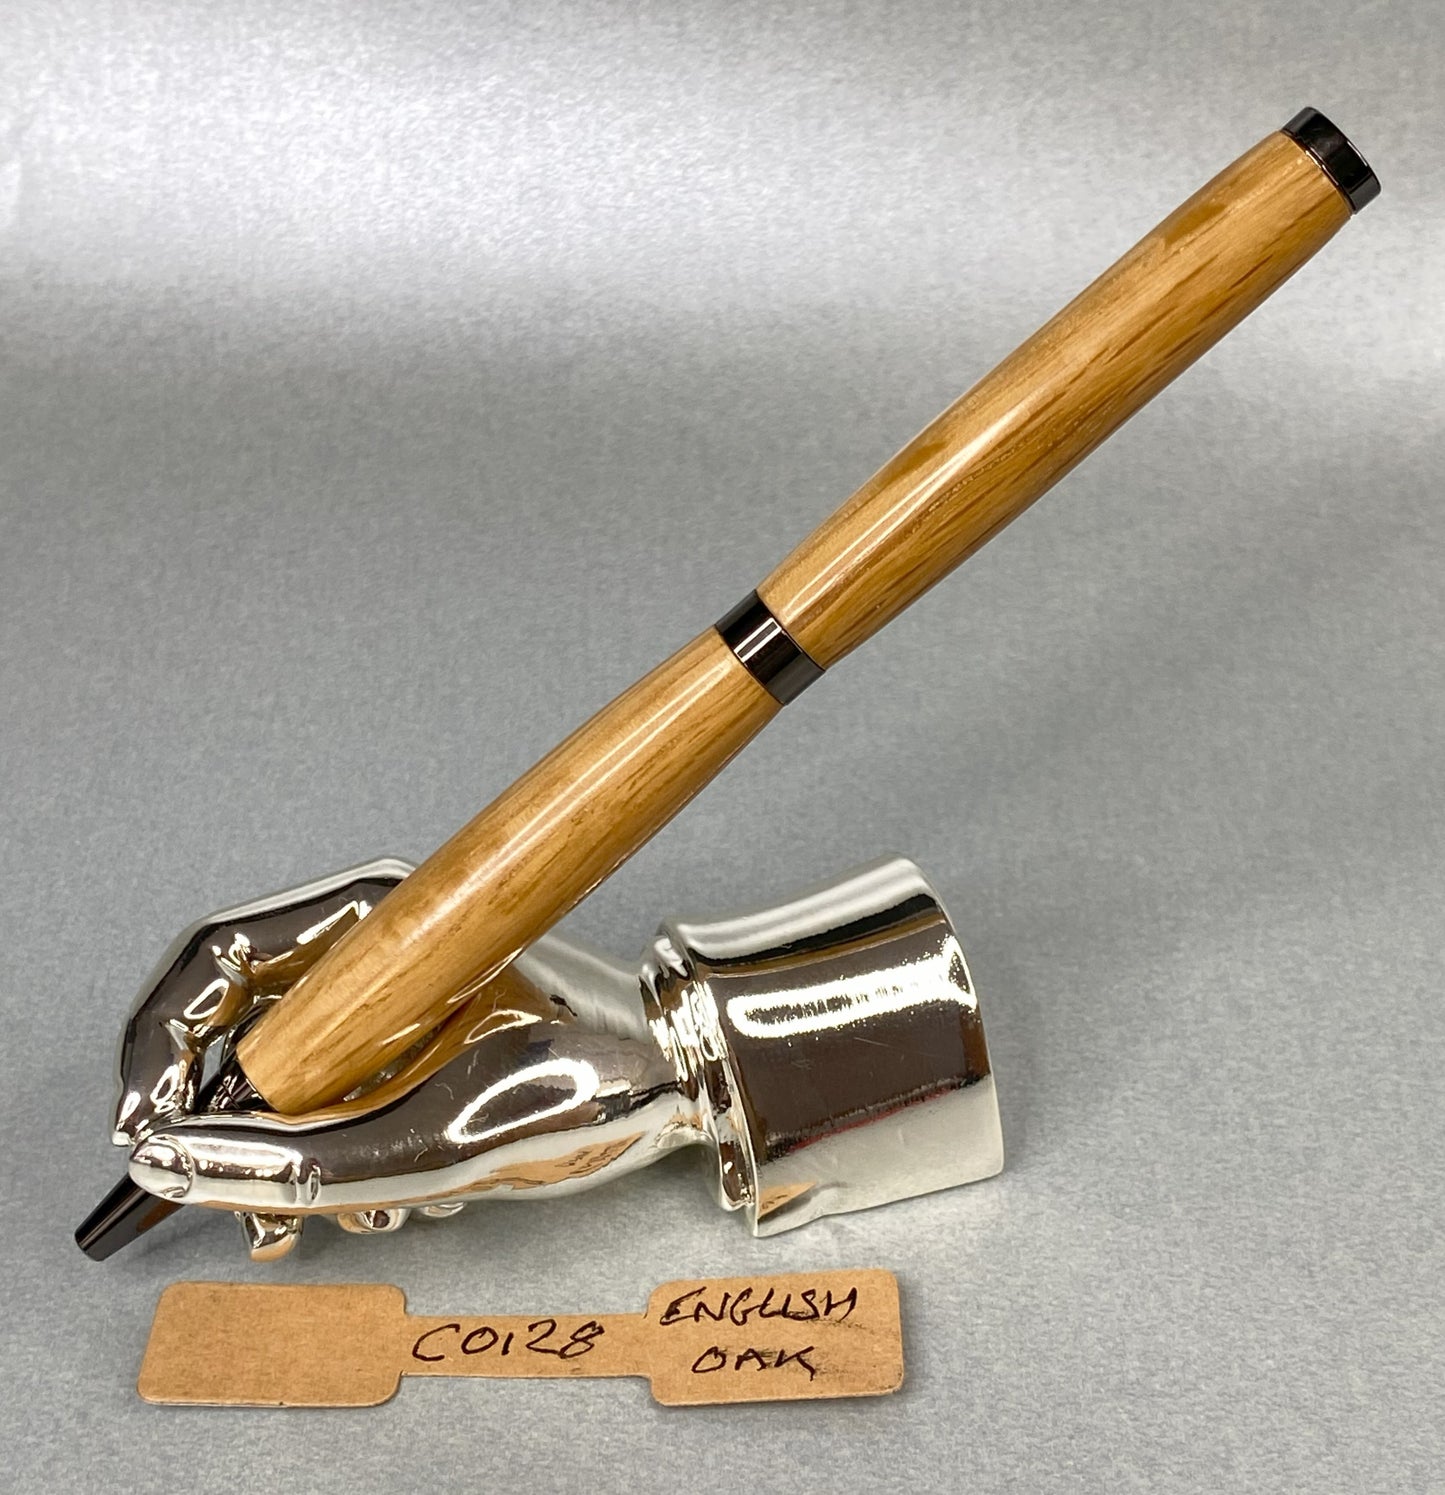 English Oak wood pen on a chrome plated right hand shape